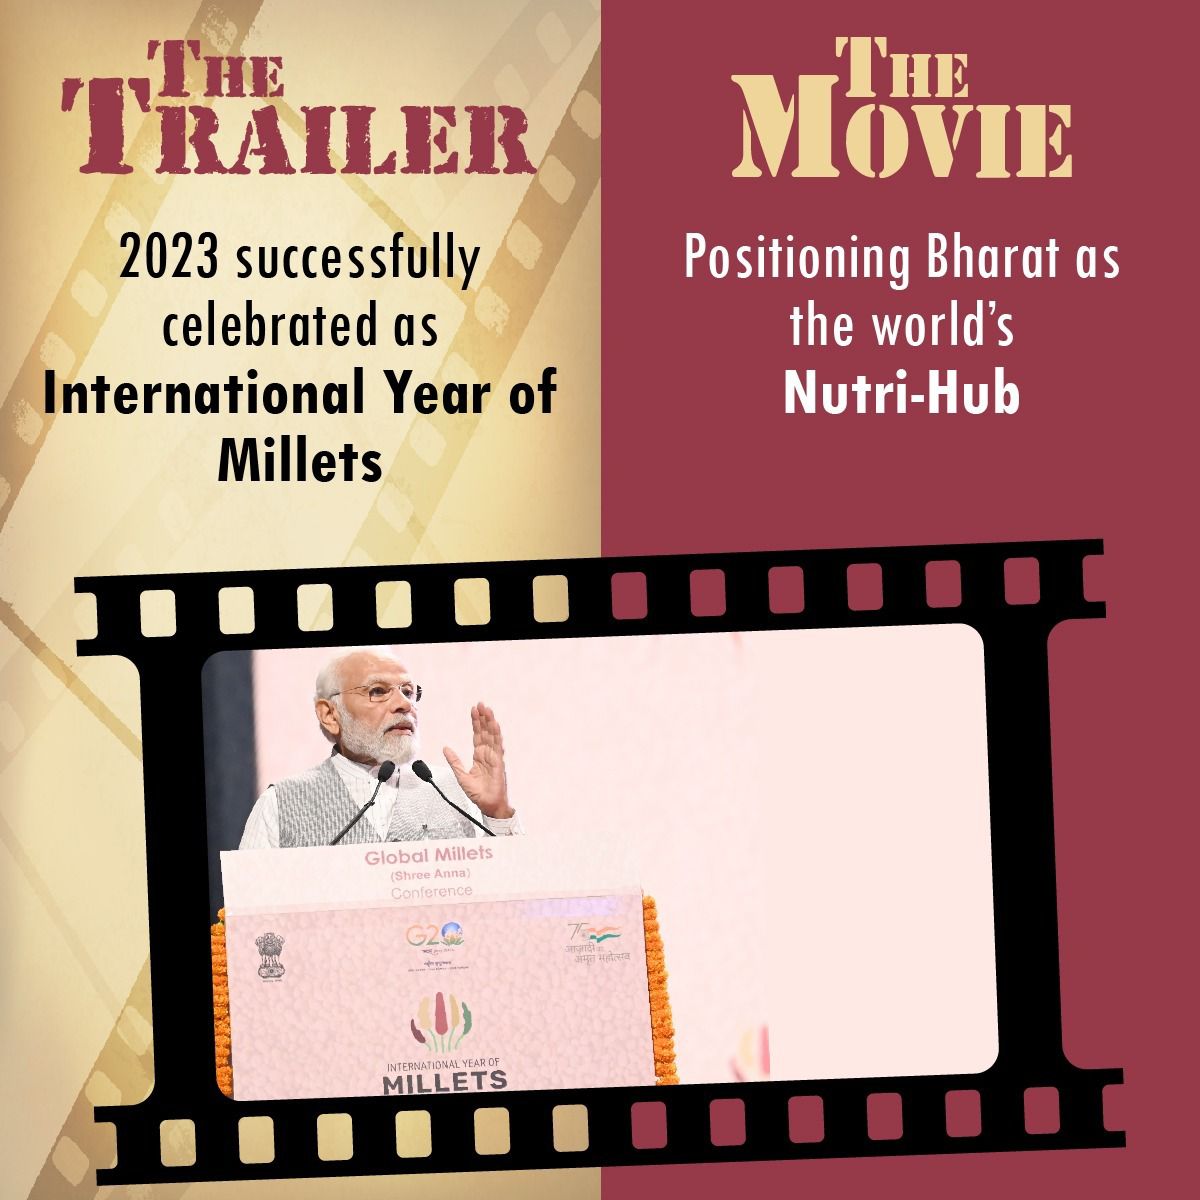 Bharat is emerging as a Nutri-Hub in the world... Picture Abhi Baaki Hai! 🪷 #AayegaToModiHi #PhirEkBaarModiSarkar